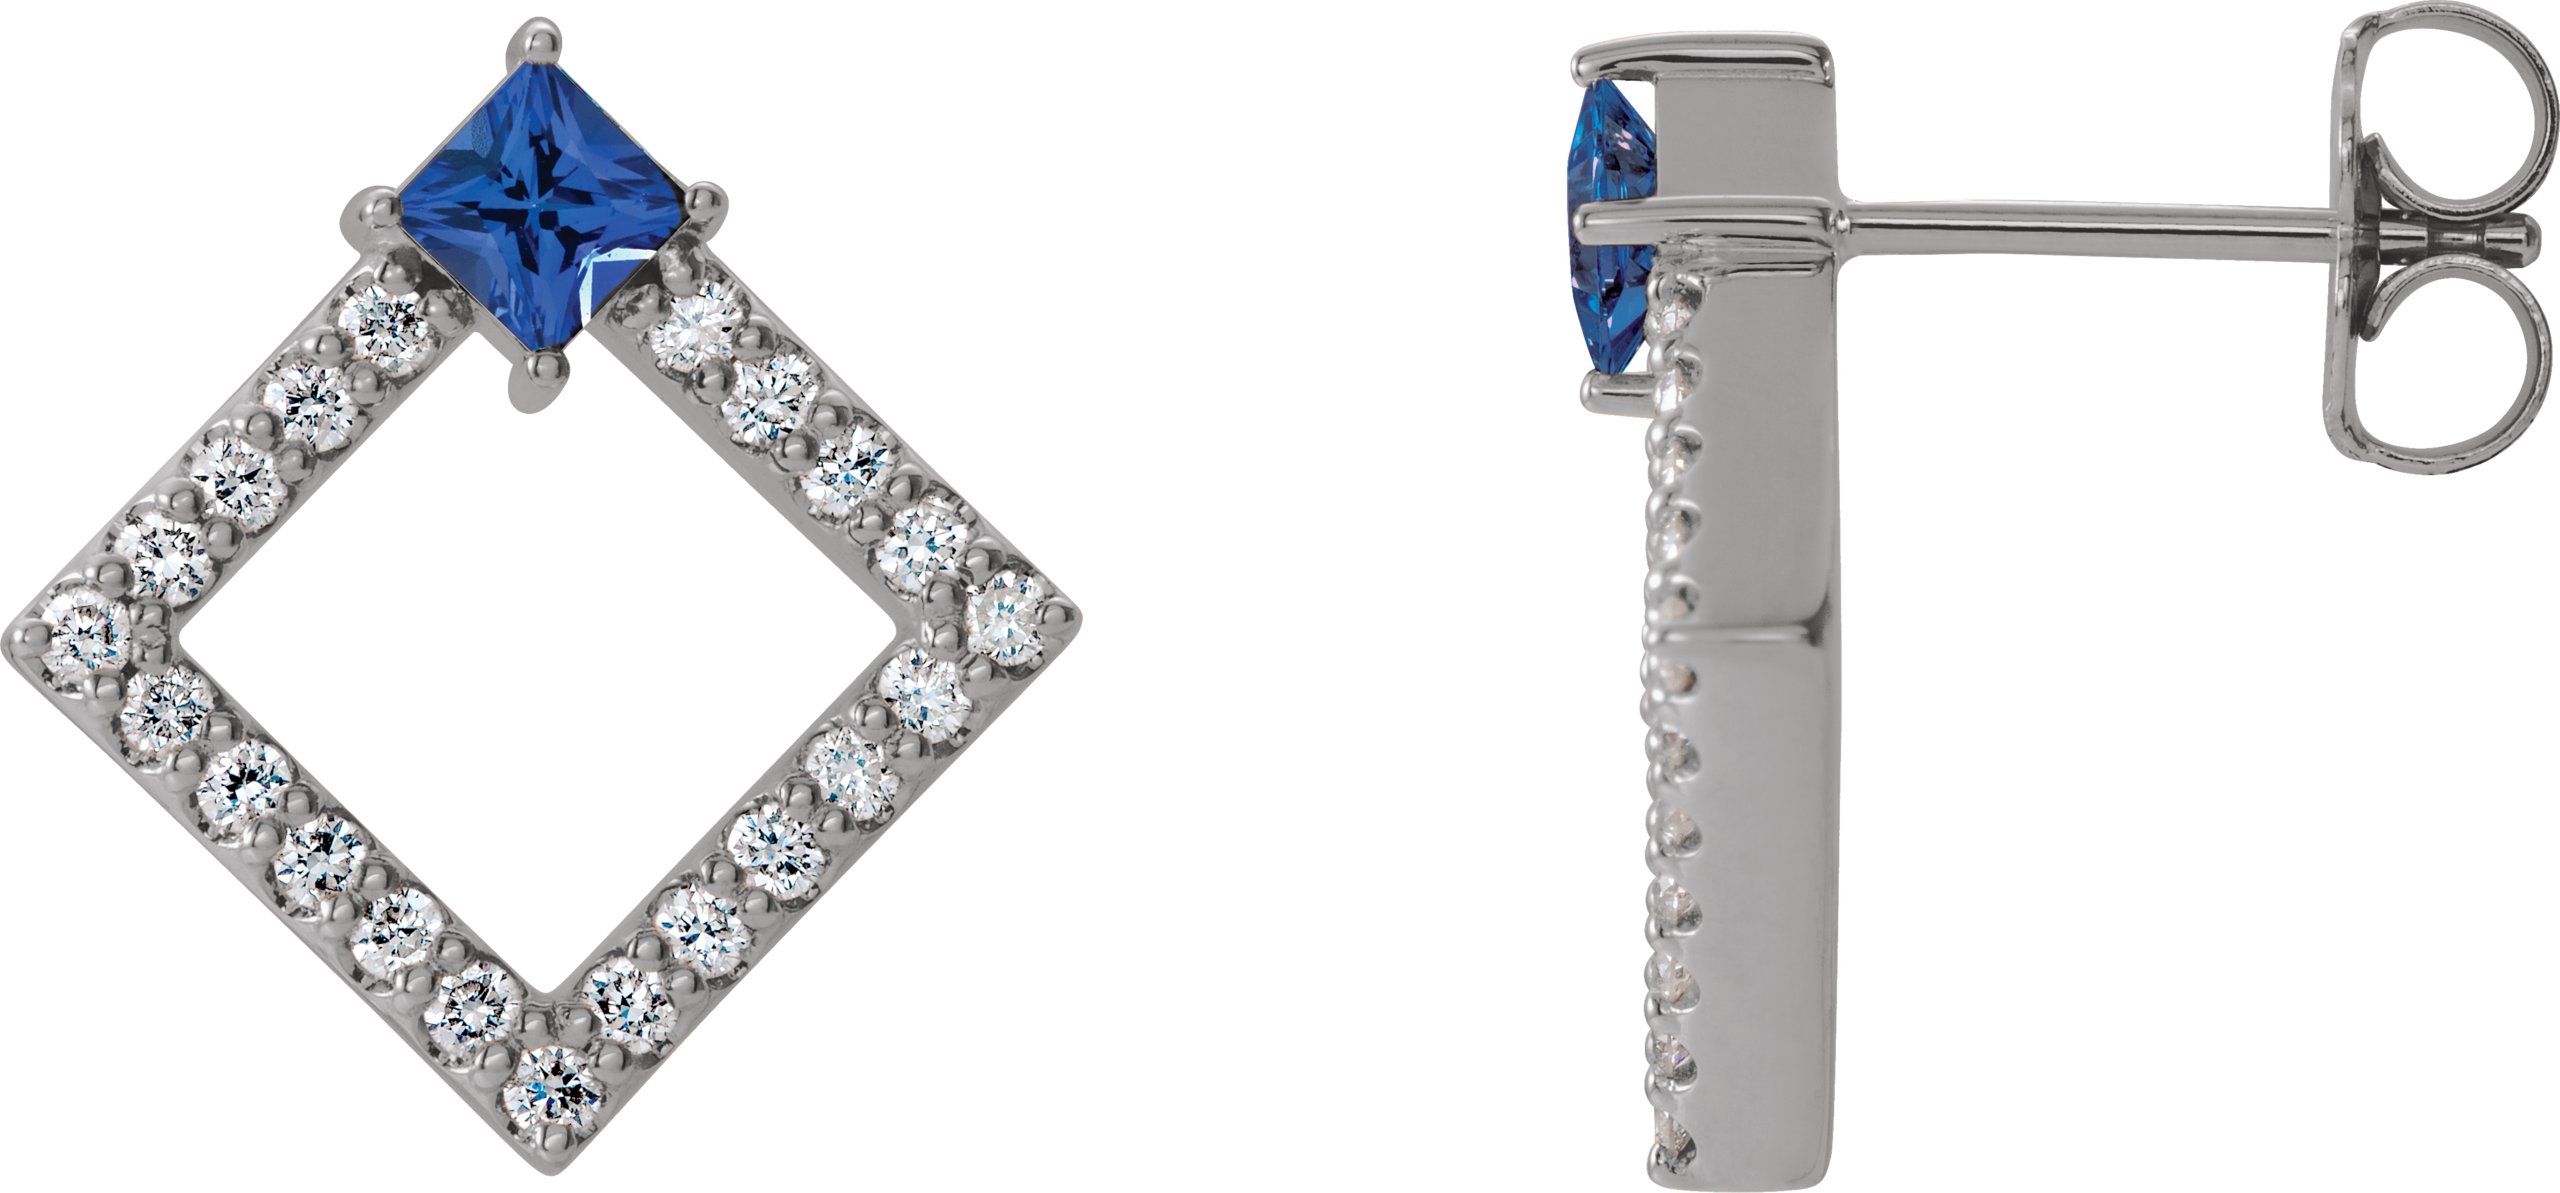 14K White Lab-Grown Blue Sapphire & 1/3 CTW Diamond Earrings